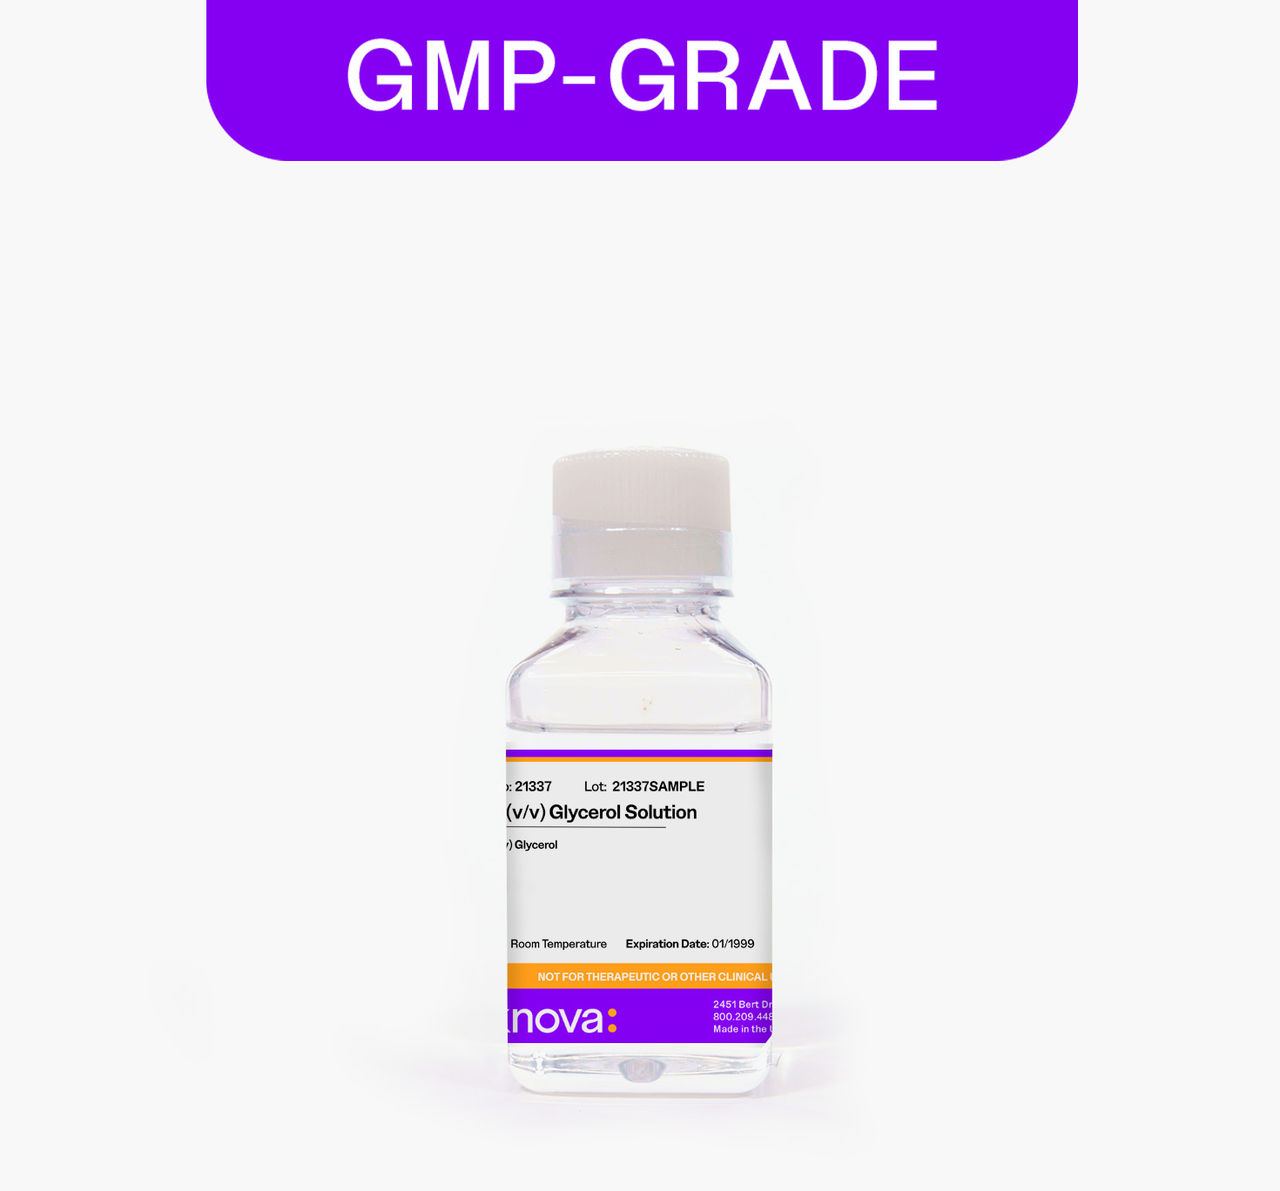 50% (v/v) Glycerol Solution, 250mL, GMP-grade